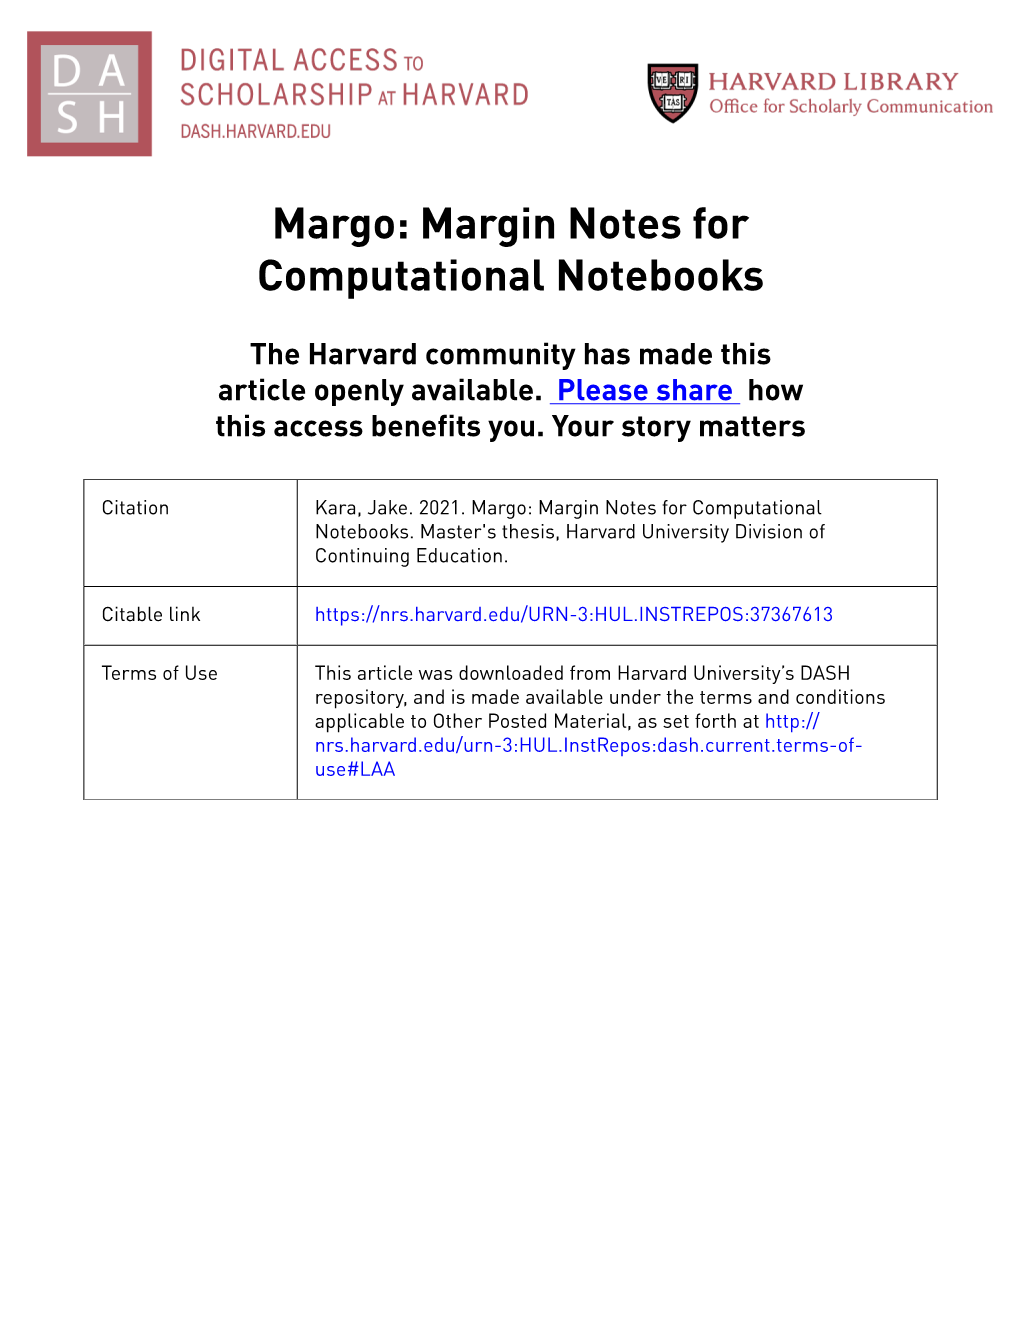 Margo: Margin Notes for Computational Notebooks